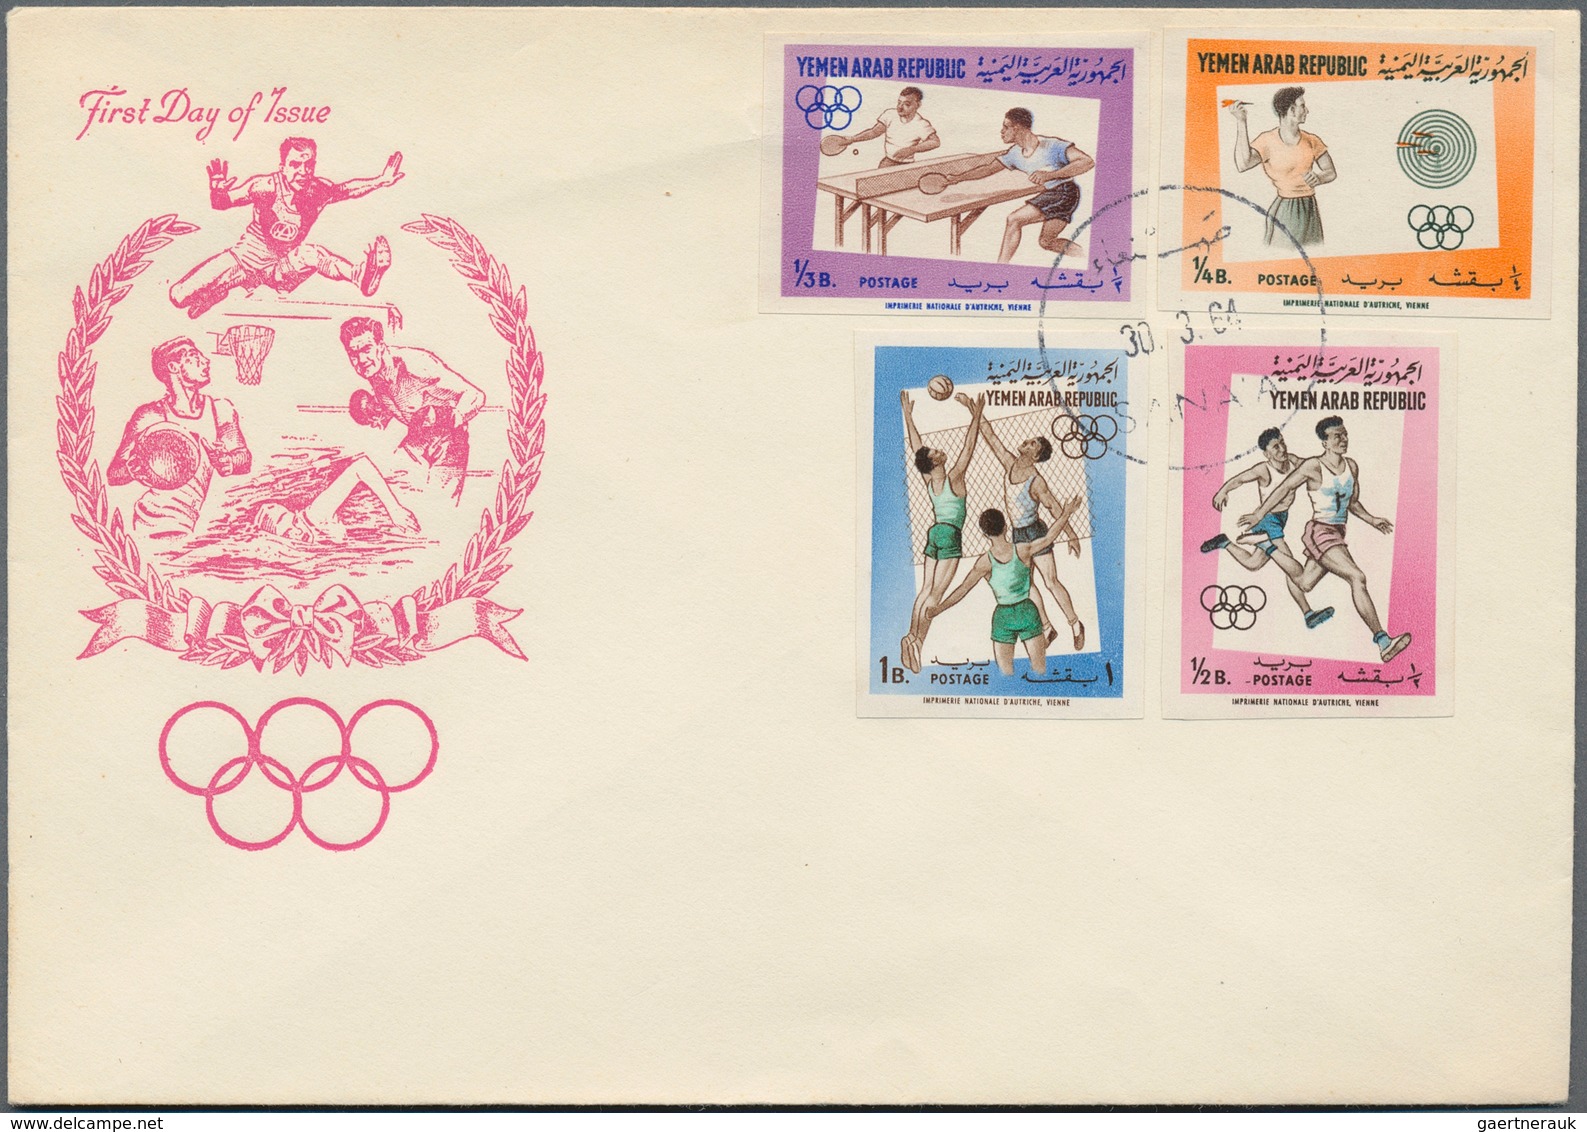 Jemen: 1930/70 (ca.), Kingdom covers (7), FDC (2 inc. 1960 olympics), 6 B. airletter blue cto (2, no